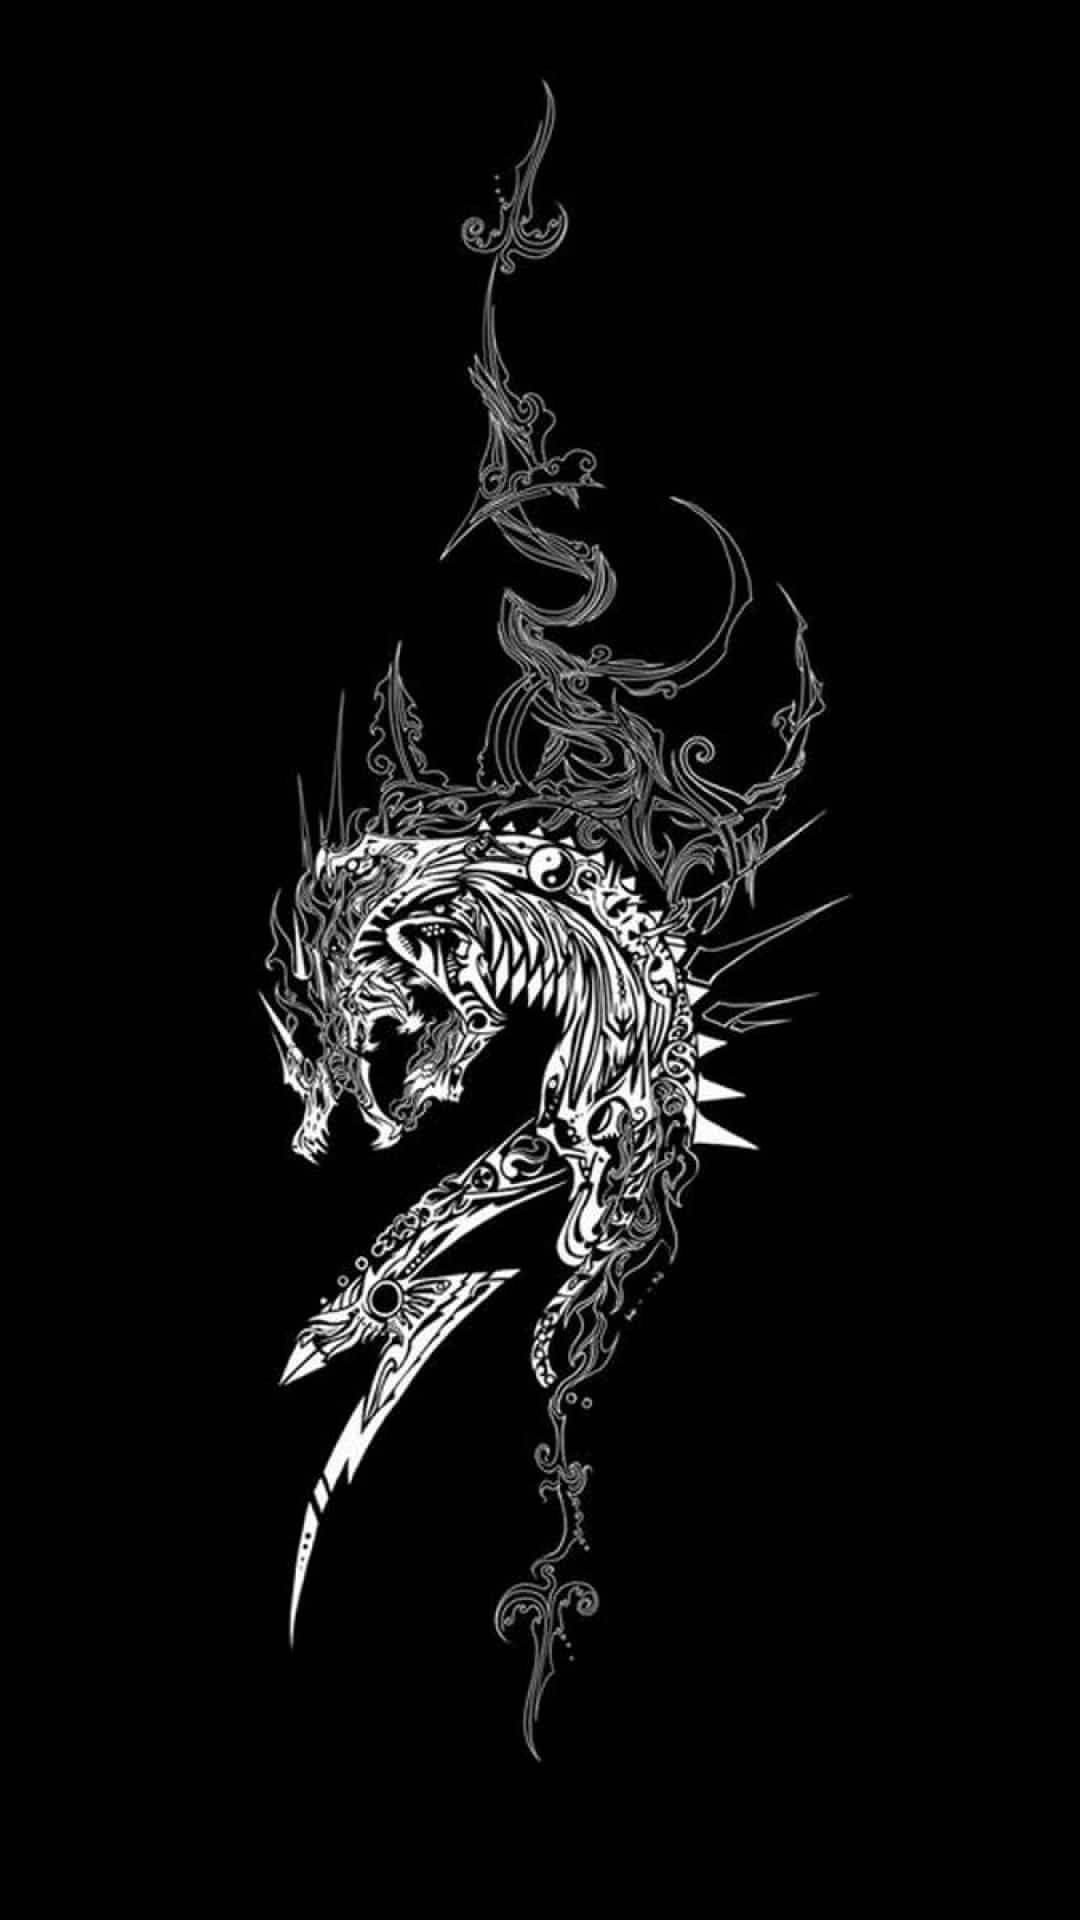 Dark Theme Black And White Dragon Smoke